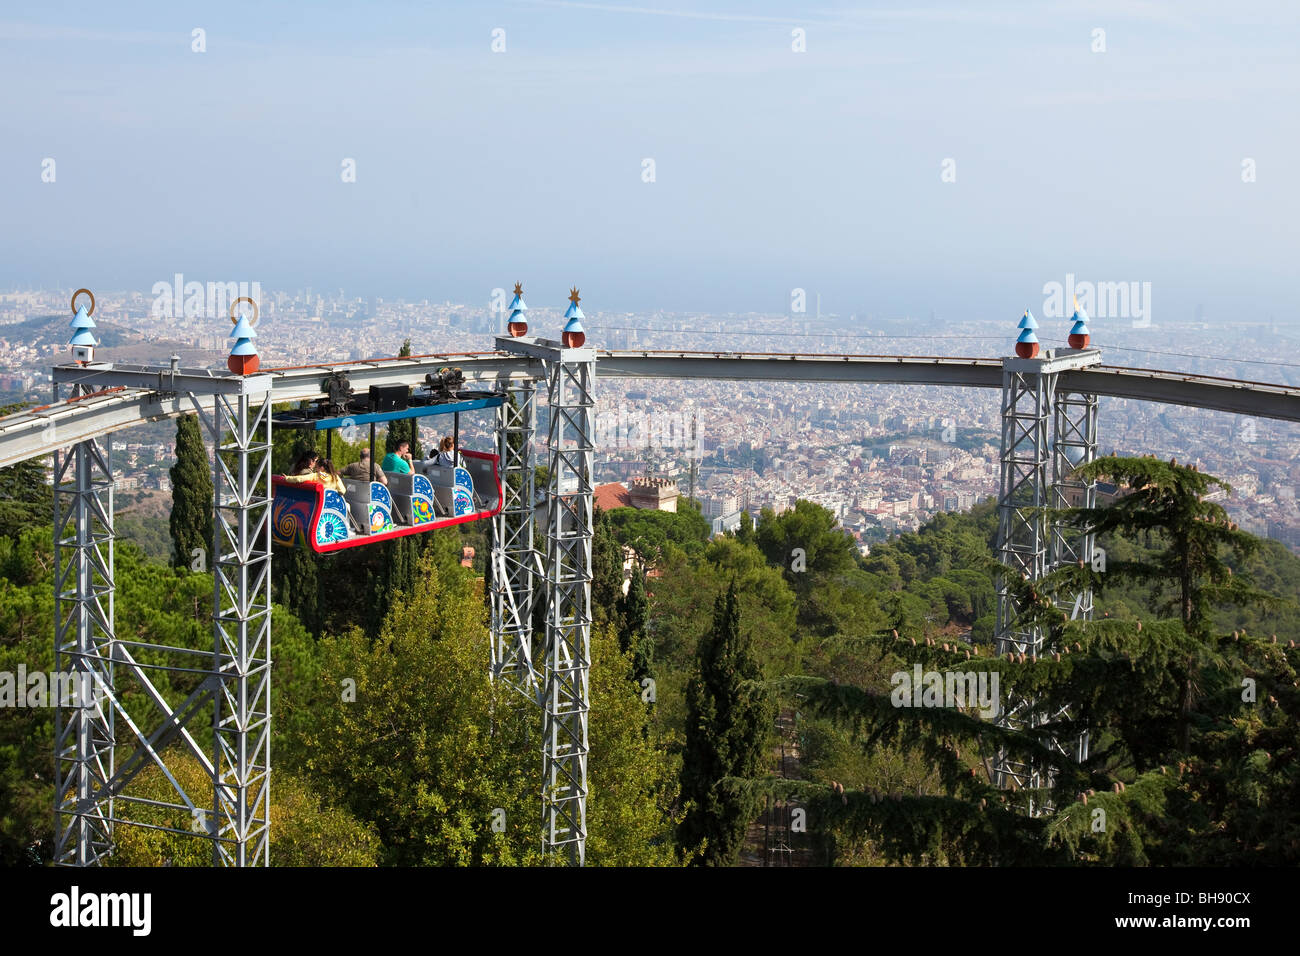 Amusement Park at Top of Tibidabo Mountain, Barcelona, Catalonia, Spain Stock Photo